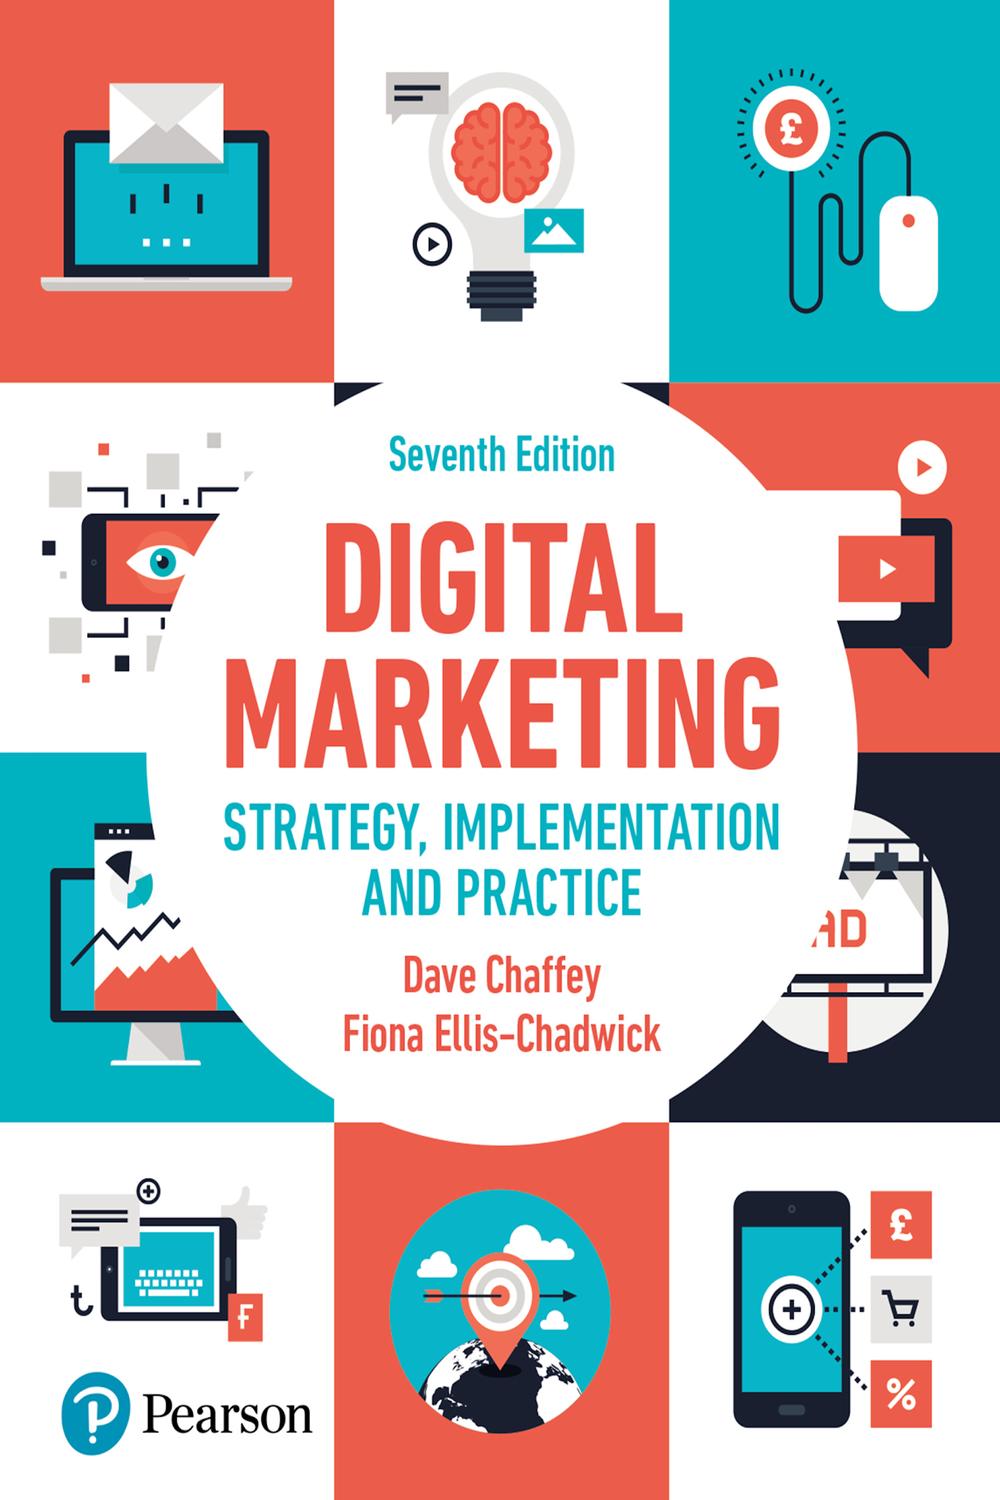 Digital Marketing - Dave Chaffey, Fiona Ellis-Chadwick,,